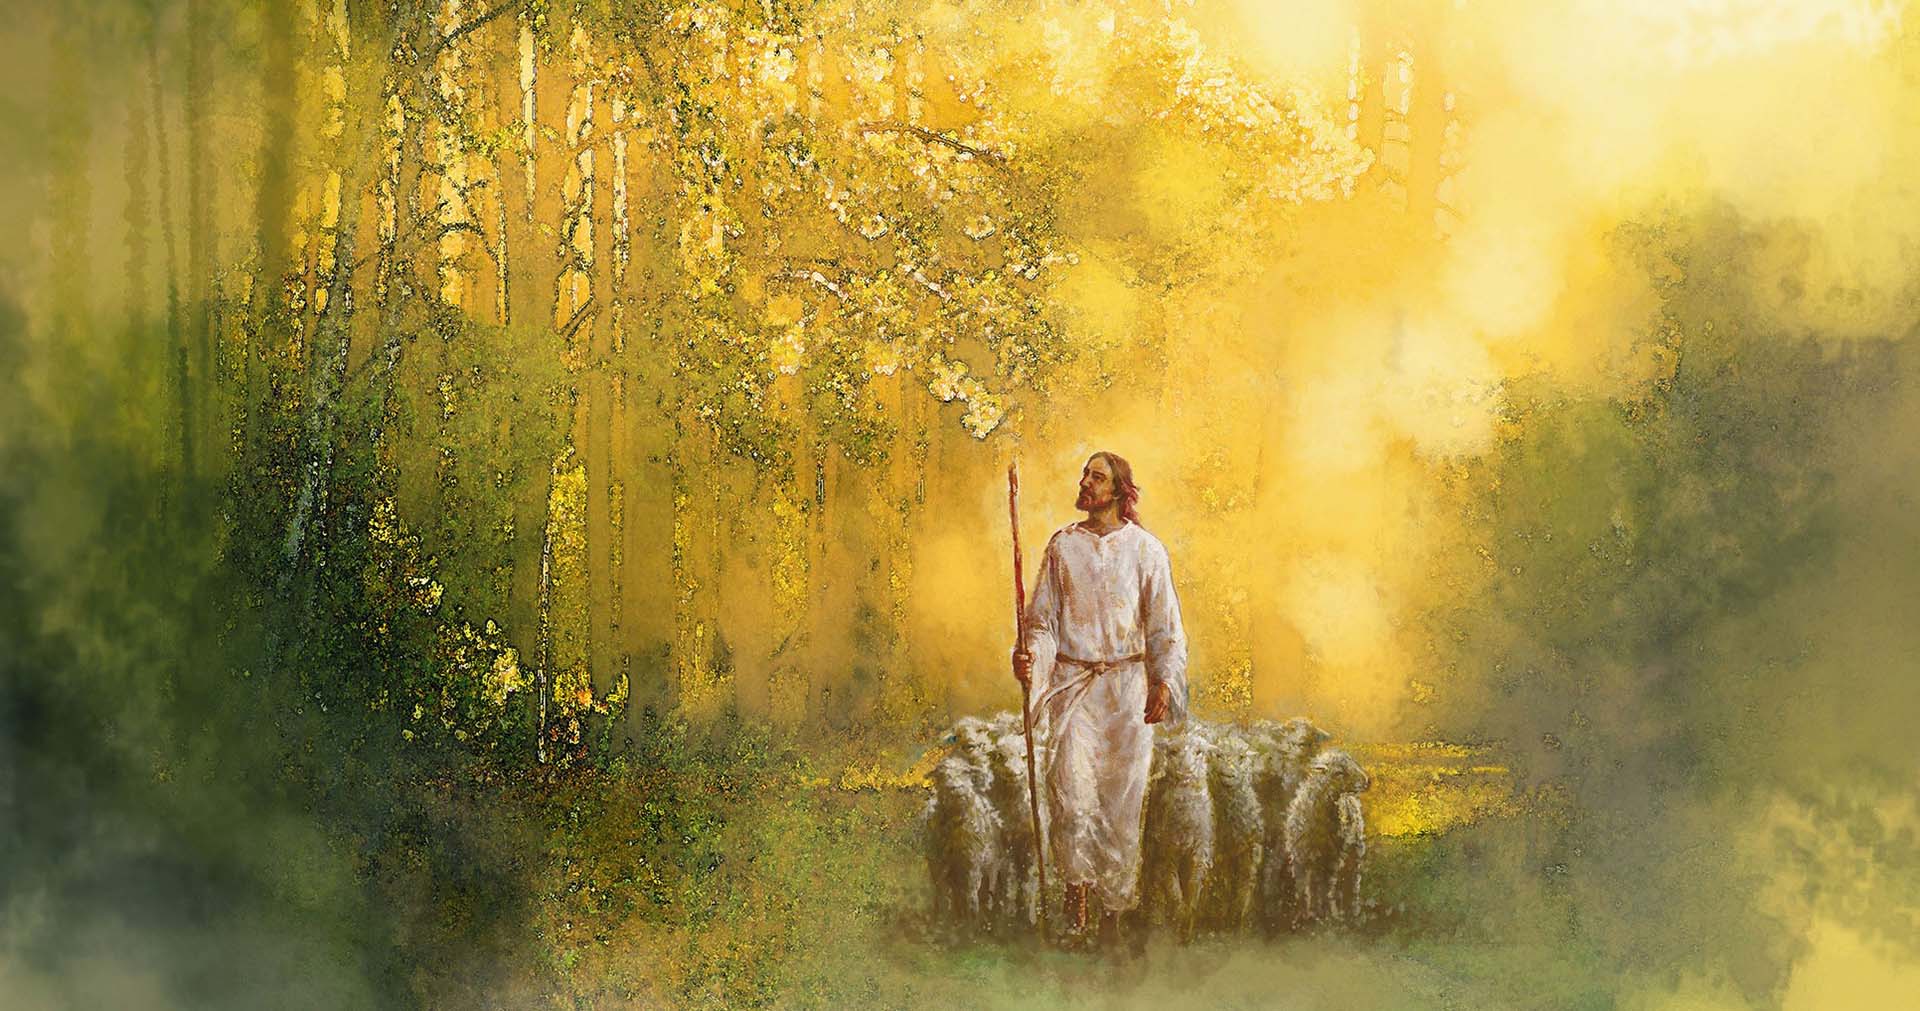 The Lord Is My Shepherd, by Yongsung Kim, havenlight.com. Image via Church of Jesus Christ.